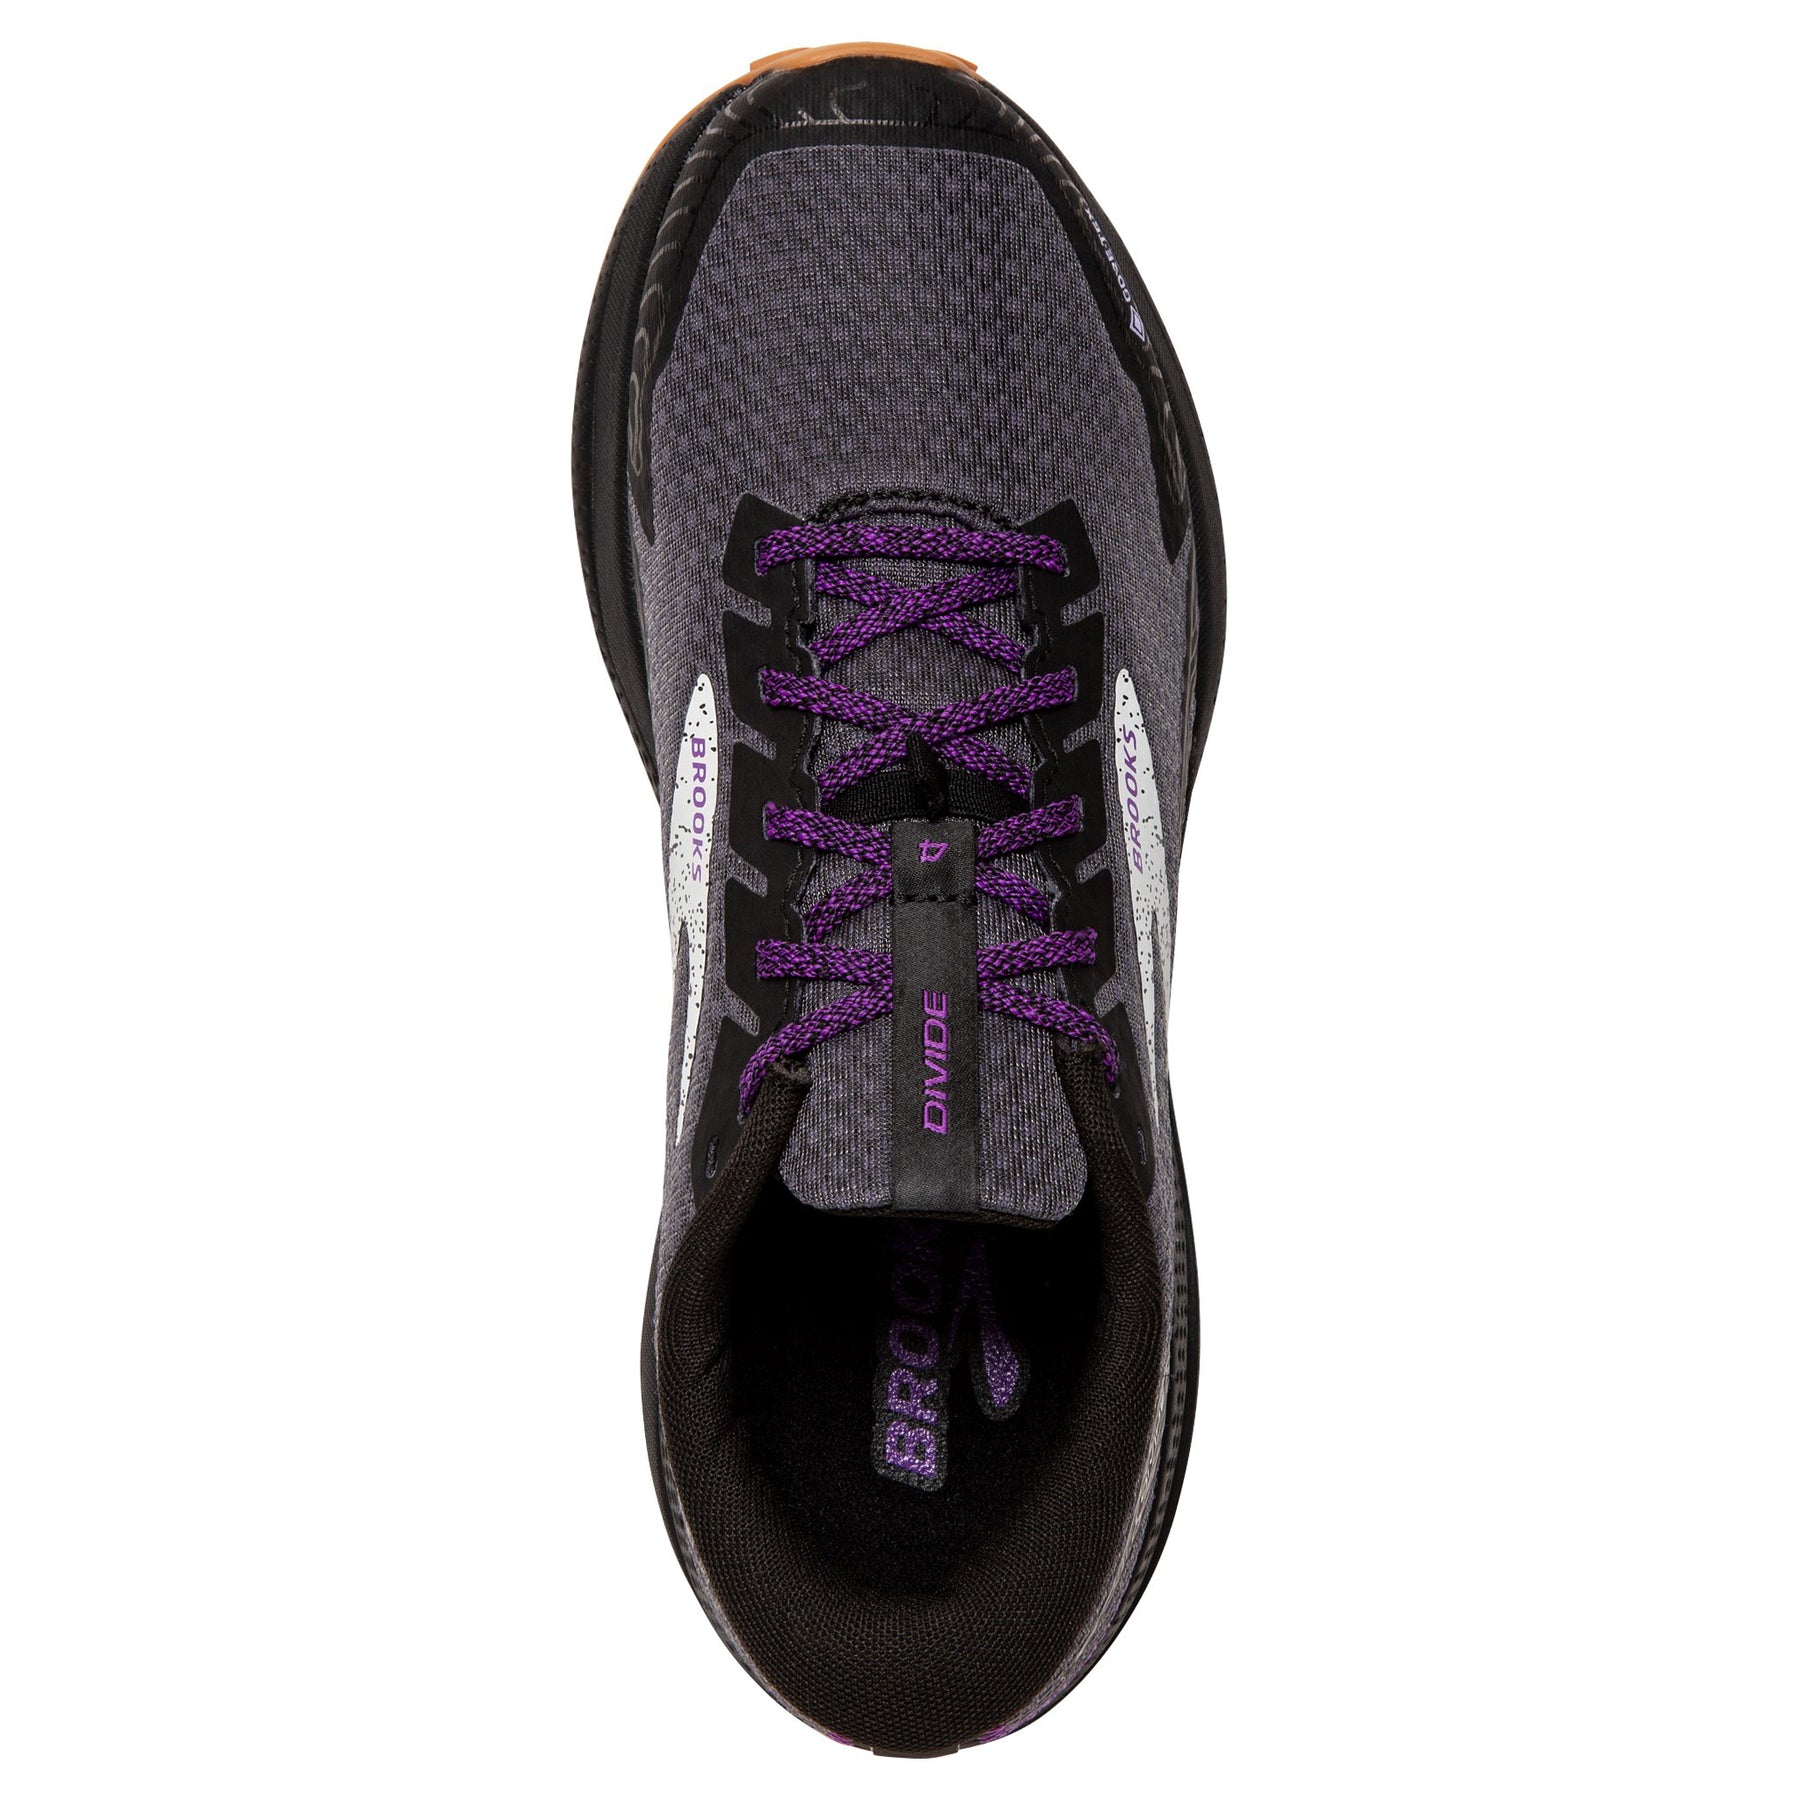 Brooks Divide 4 GTX Womens Trail Shoes: Black/Blackened Pearl/Purple